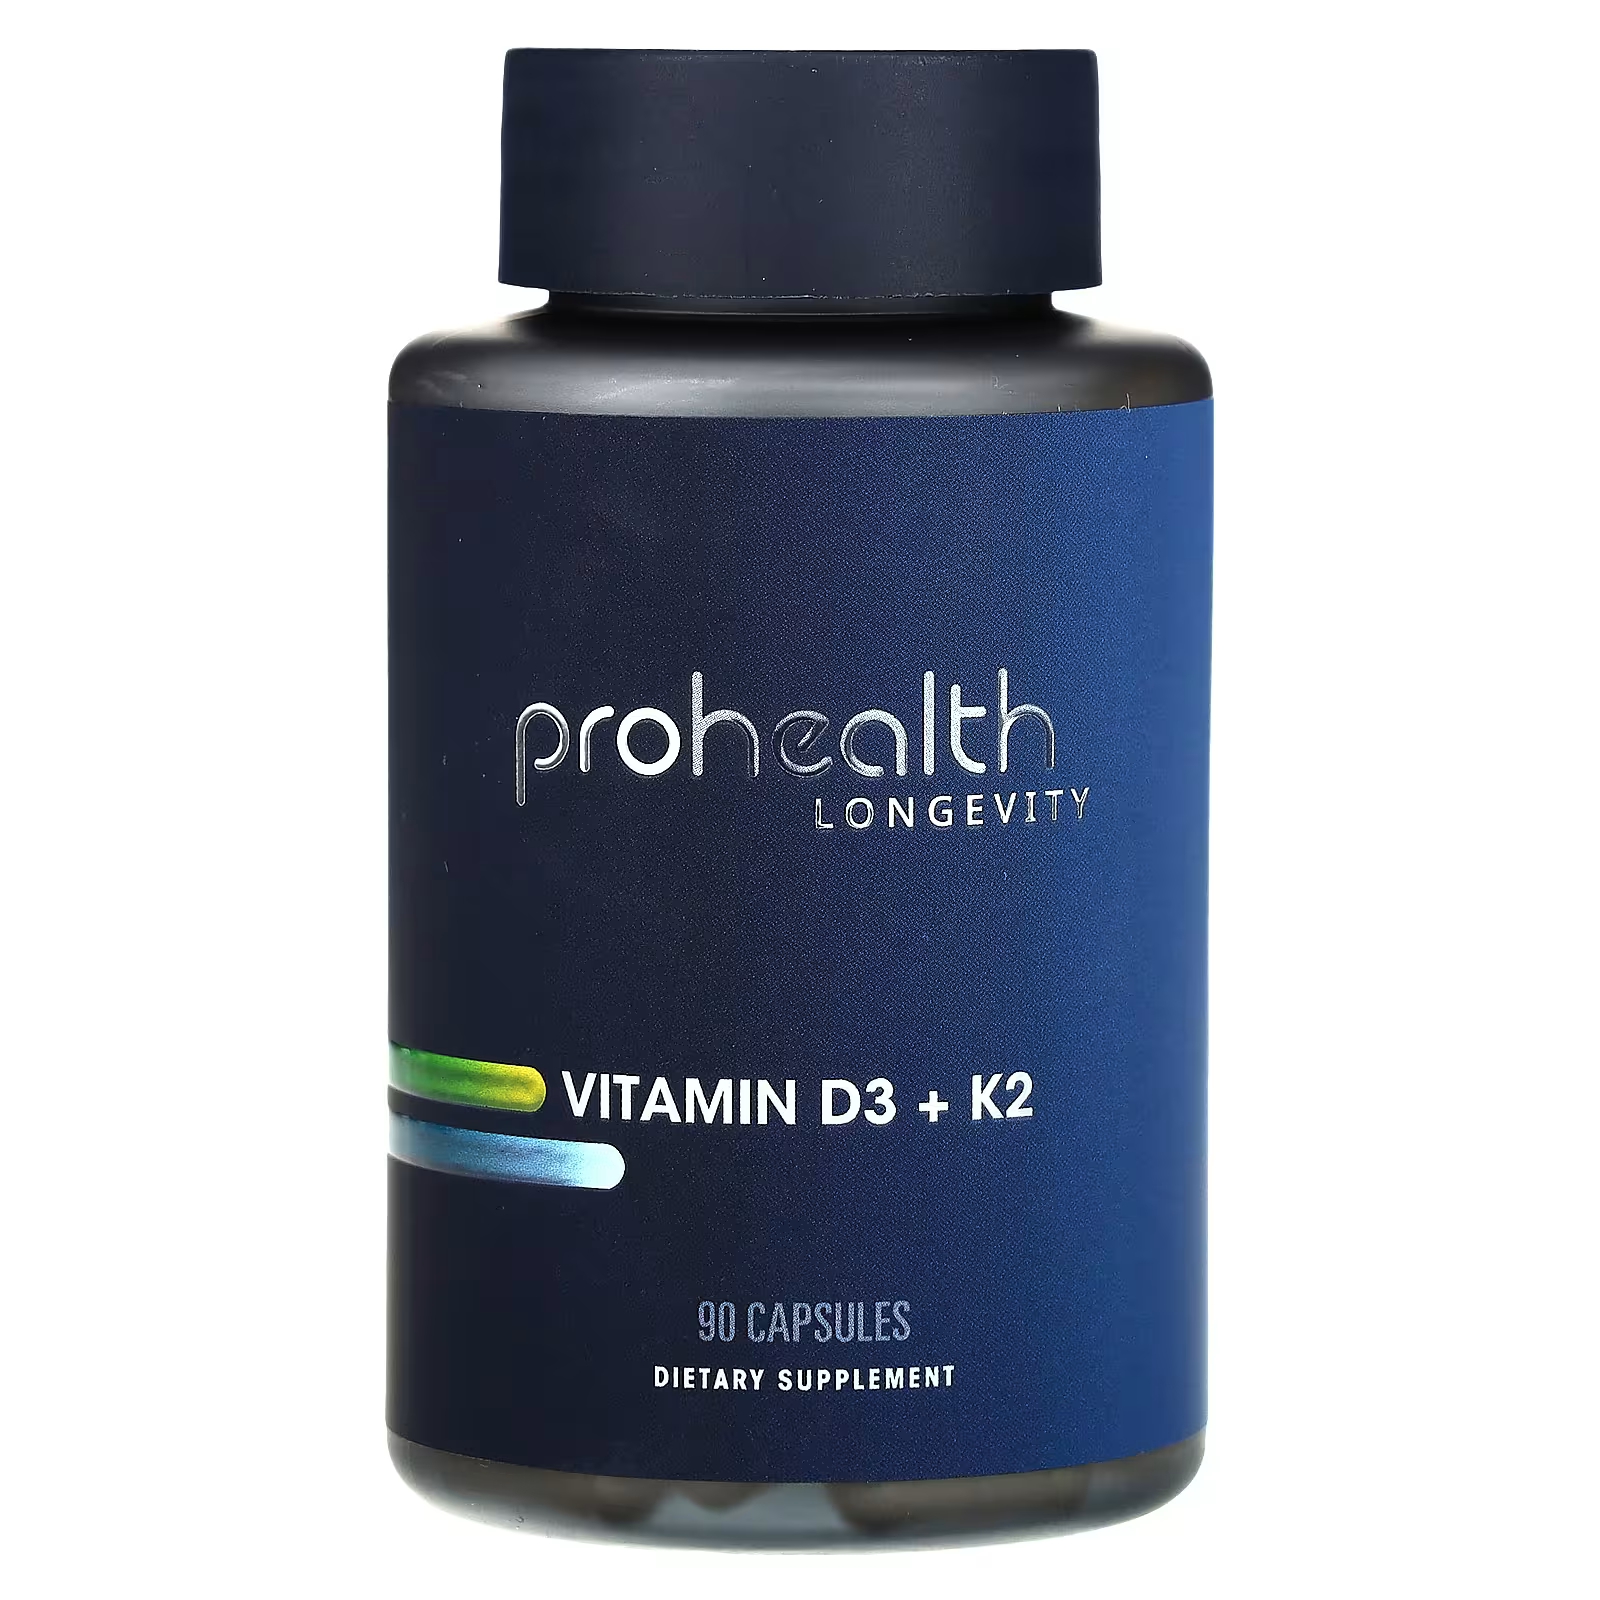 ProHealth Витамин D3 + K2 долголетия, 90 капсул ProHealth Longevity витамин d3 k2 90 капсул naturesplus